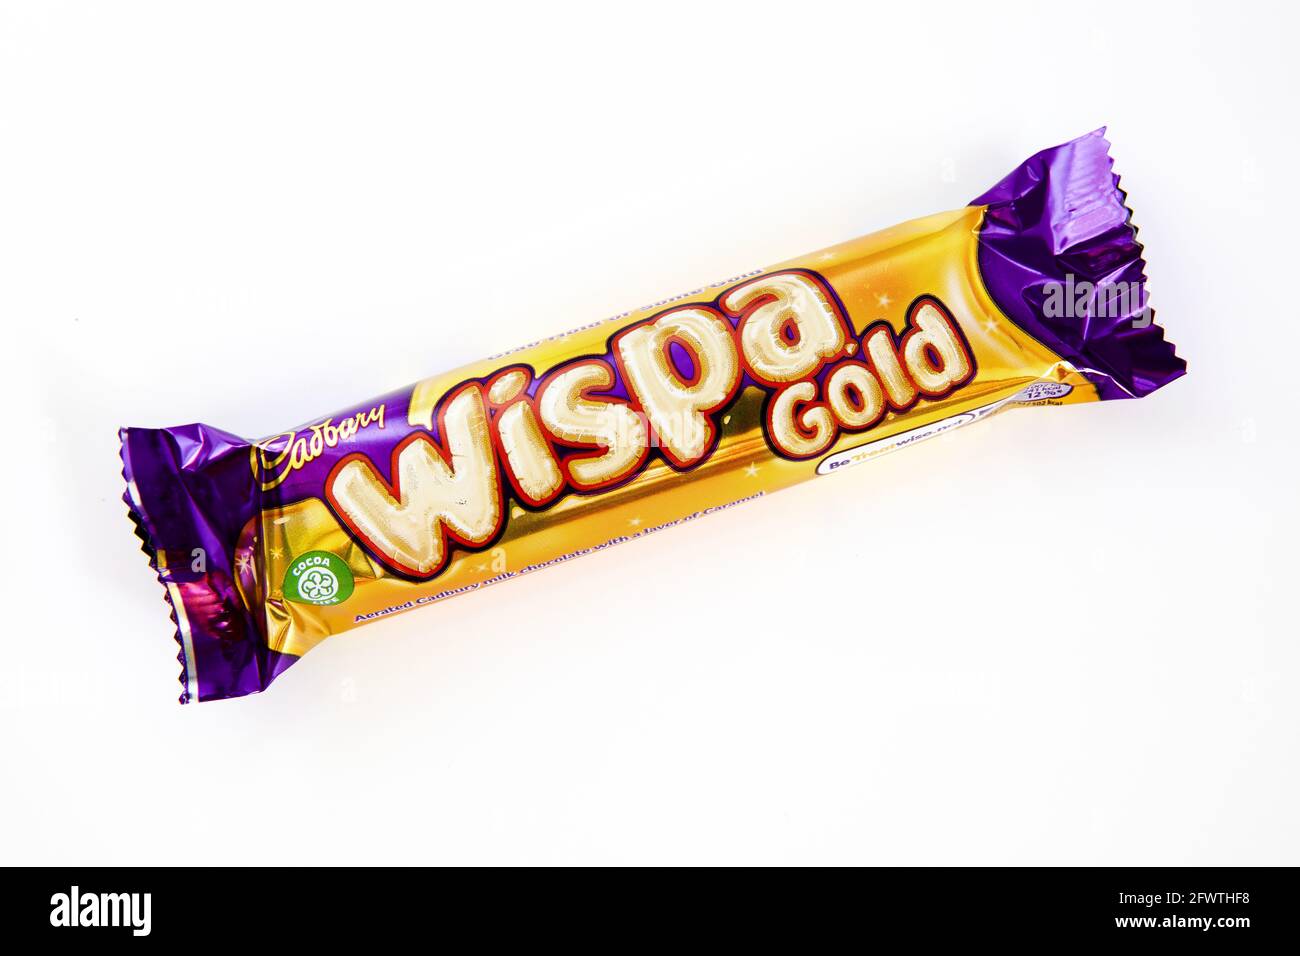 Cadbury Wispa Gold  Candy bar, Wispa, Cadbury wispa